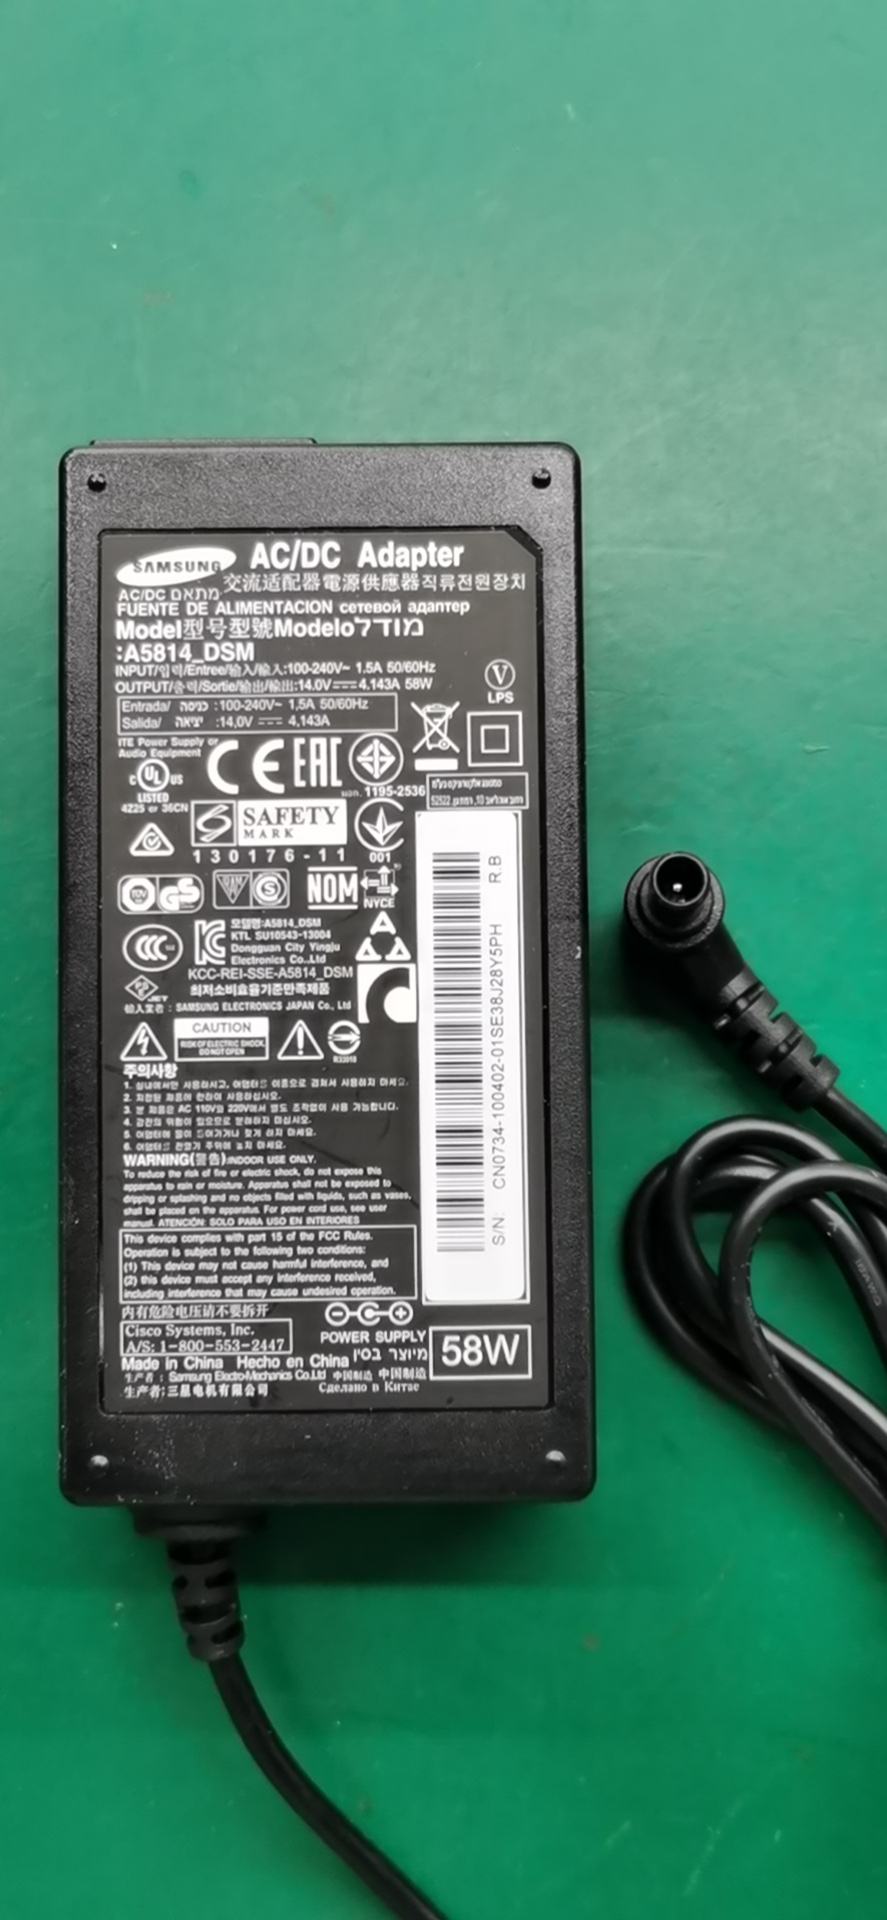 A5814-DSM 14.0V 4.143A AC/DC Adapter